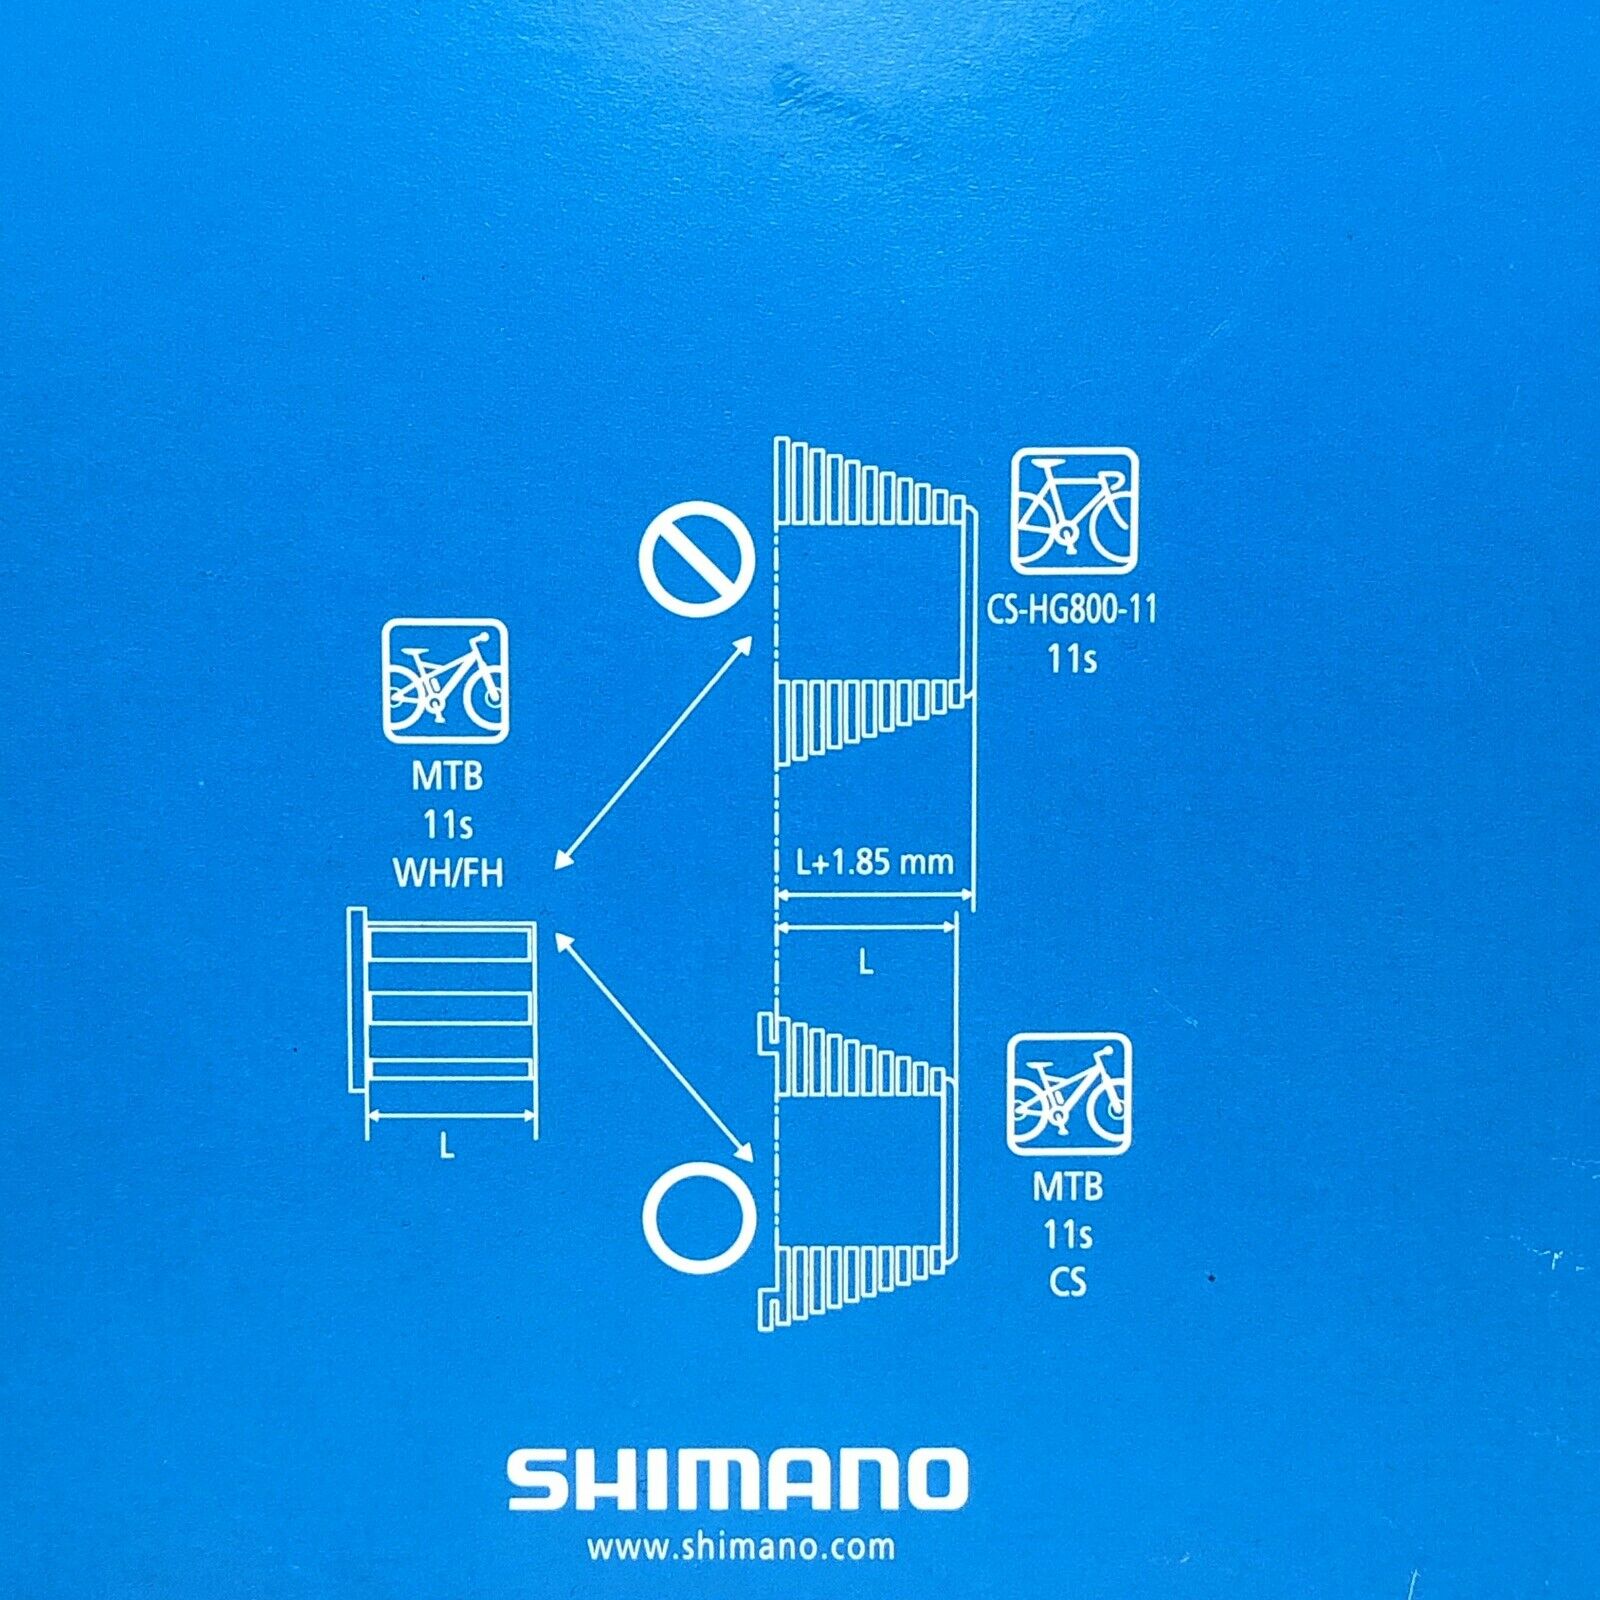 SHIMANO Ultegra CS-HG800 11-34 Cassette - 11 Speed Silver Bike Sprocket Cog Gear